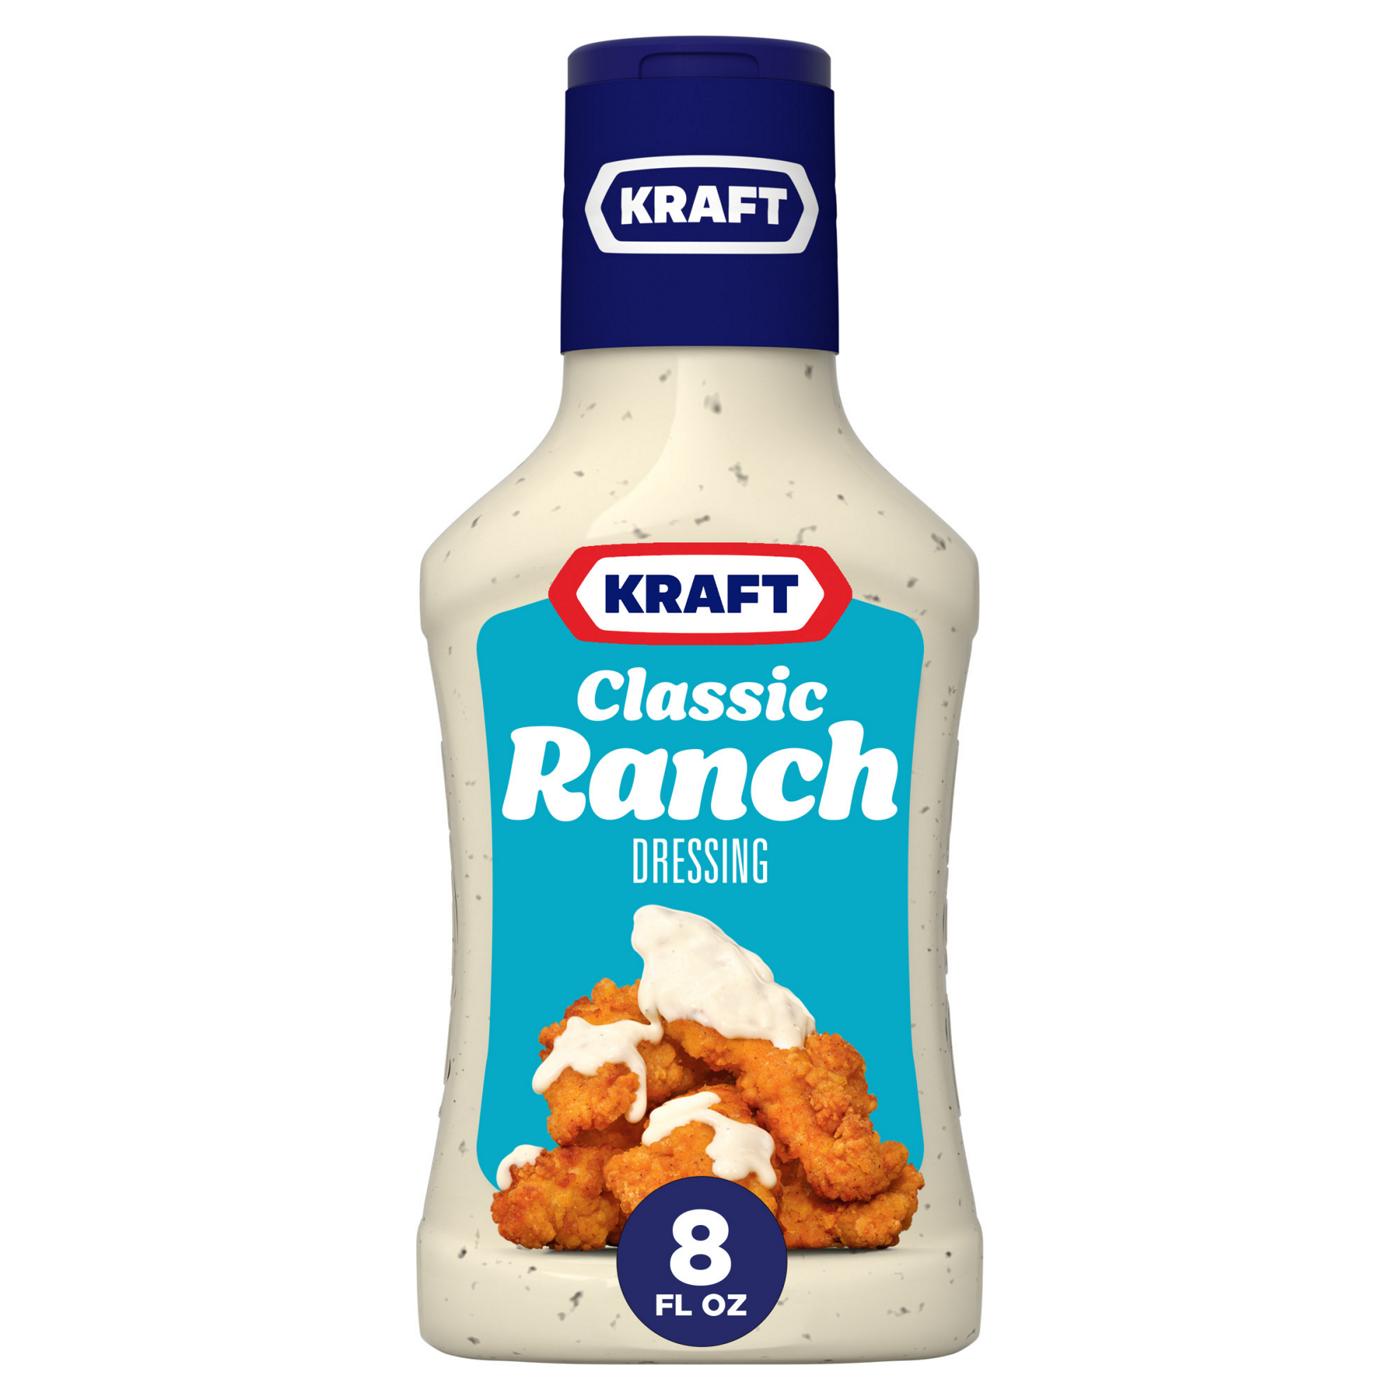 Kraft Classic Ranch Dressing; image 1 of 9